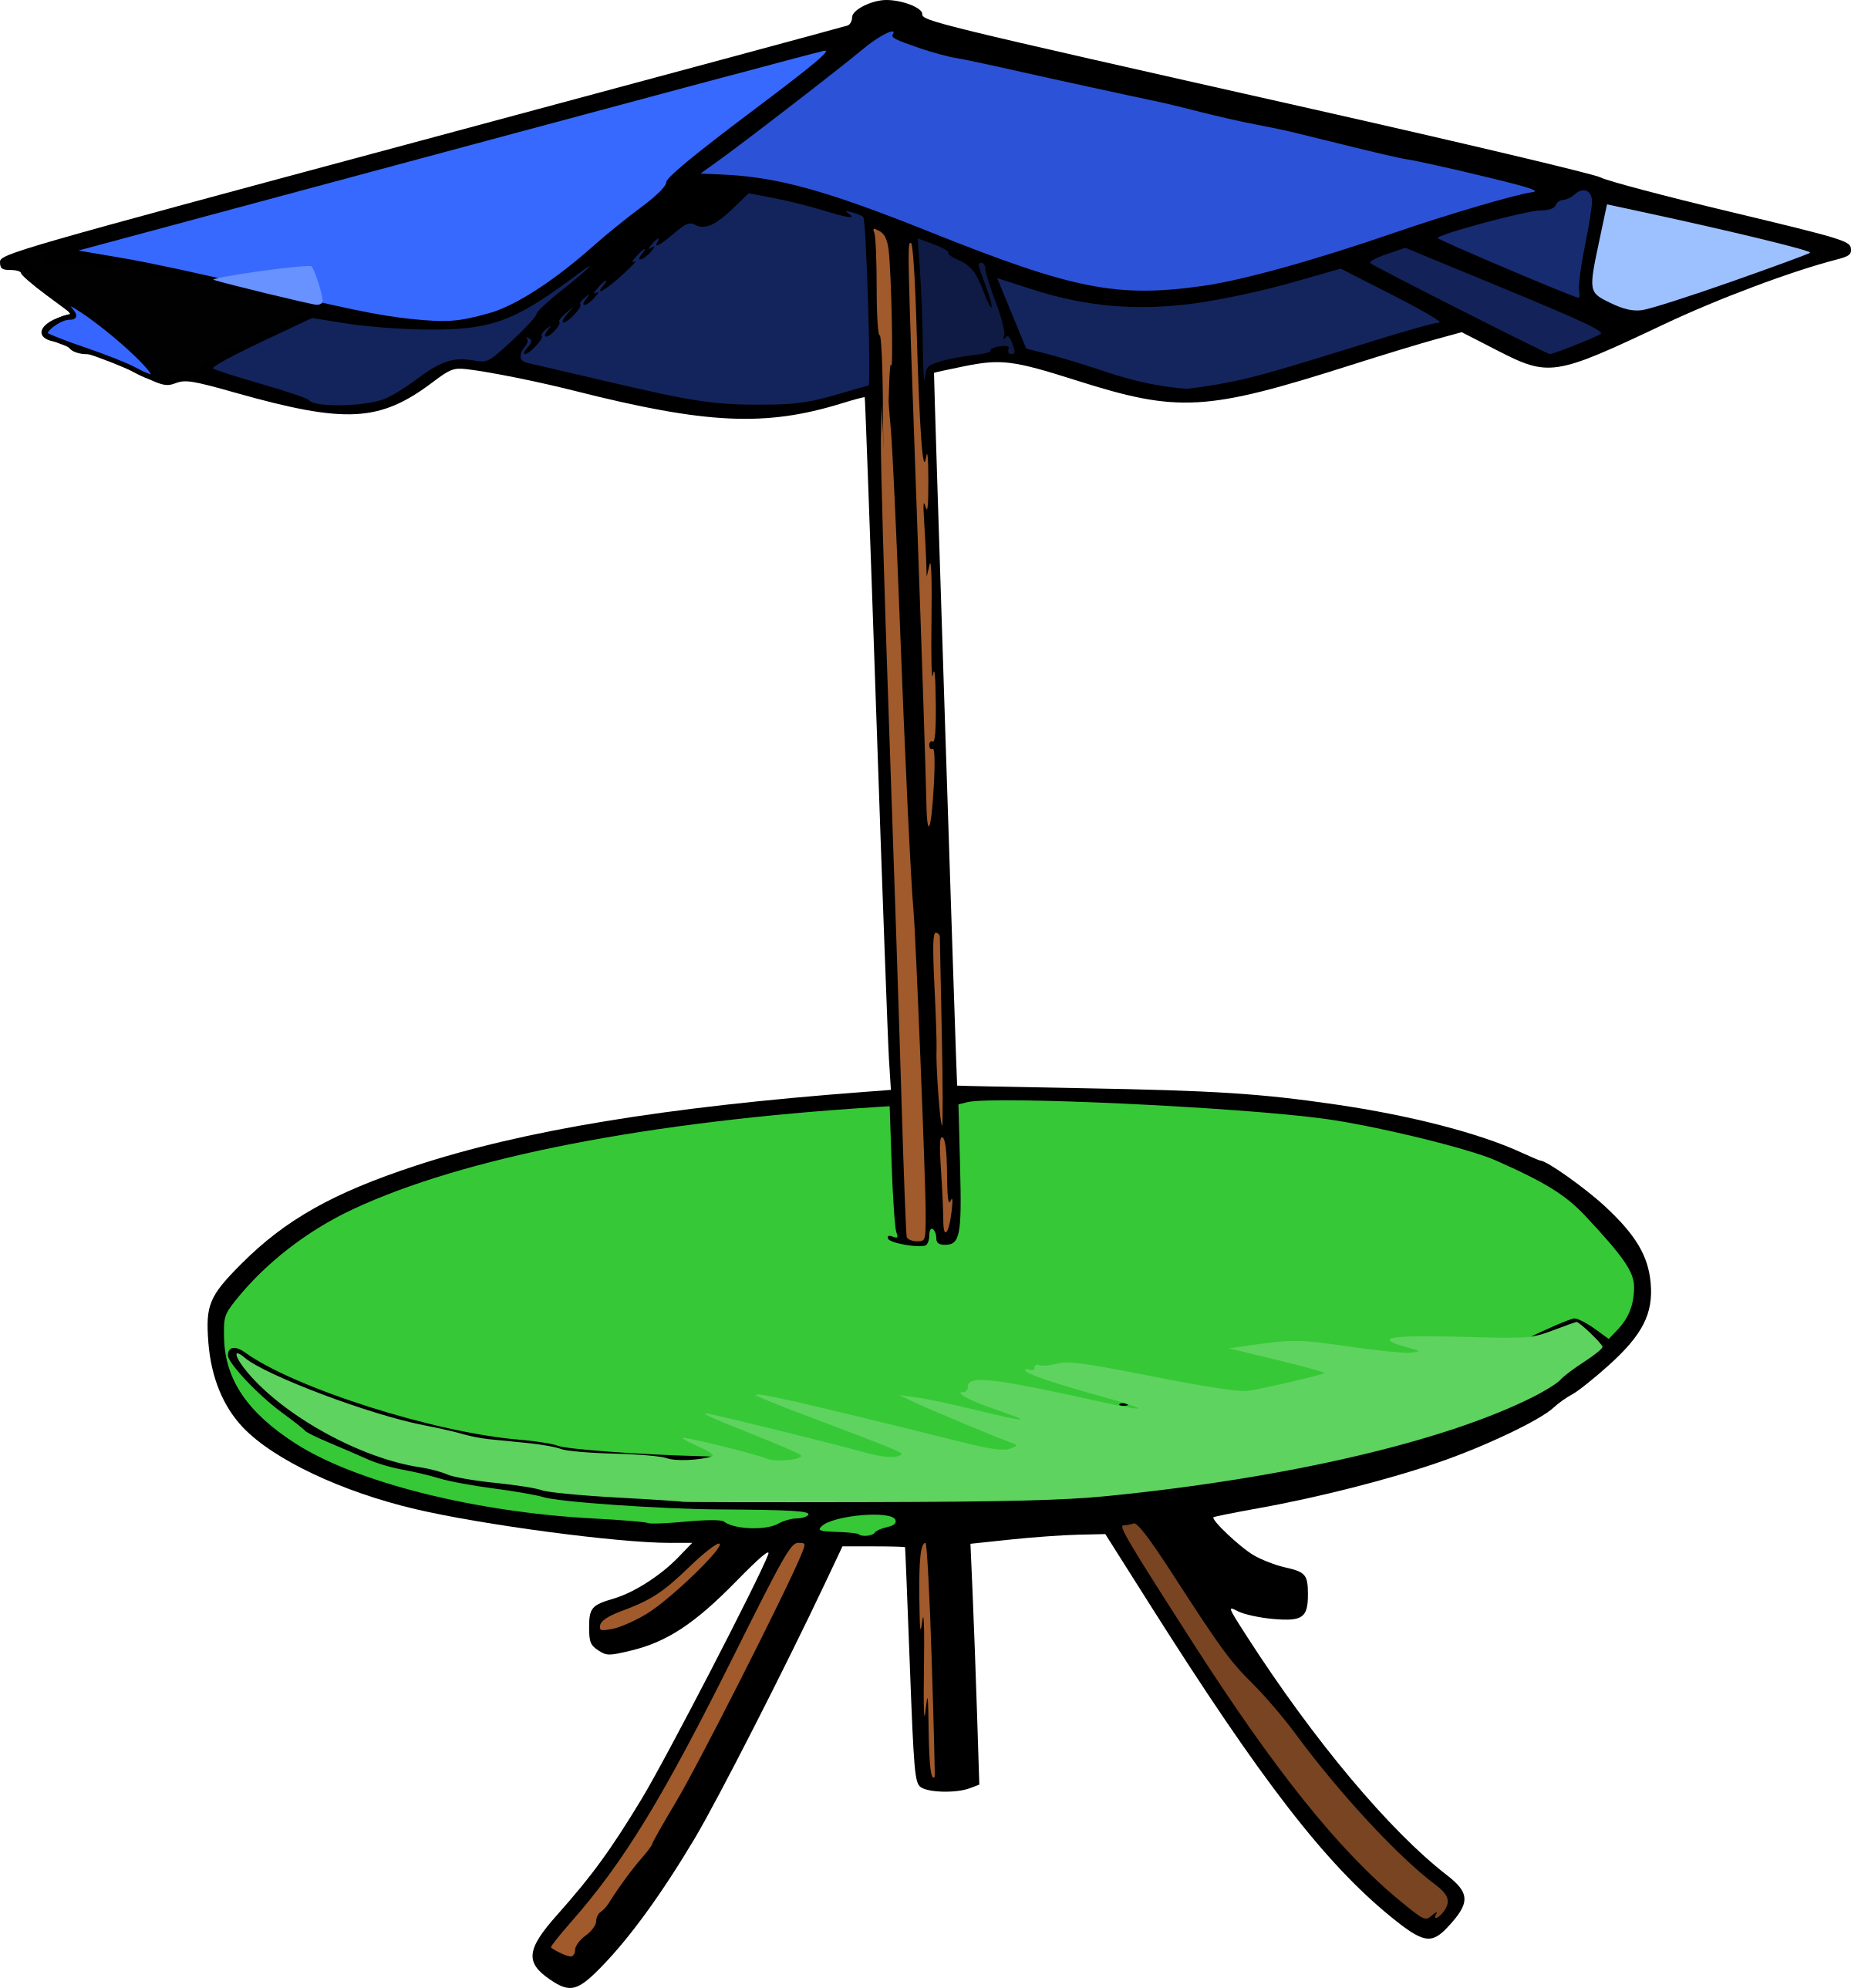 A Table With A Blue Umbrella